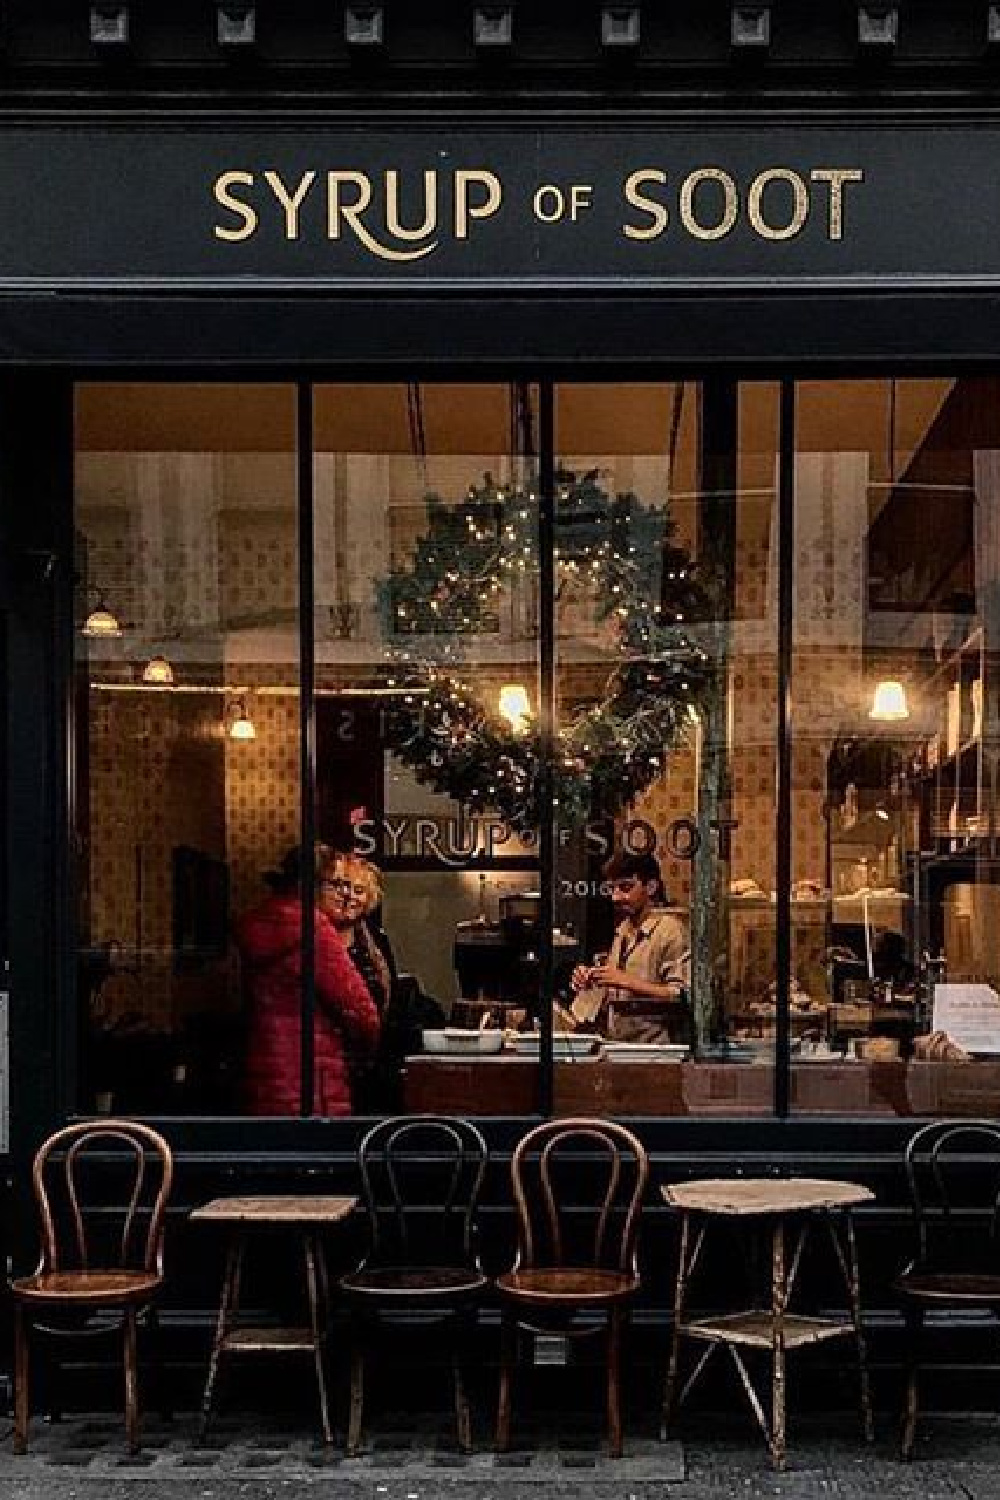 London cafe in winter with wreath - @prettycitylondon.